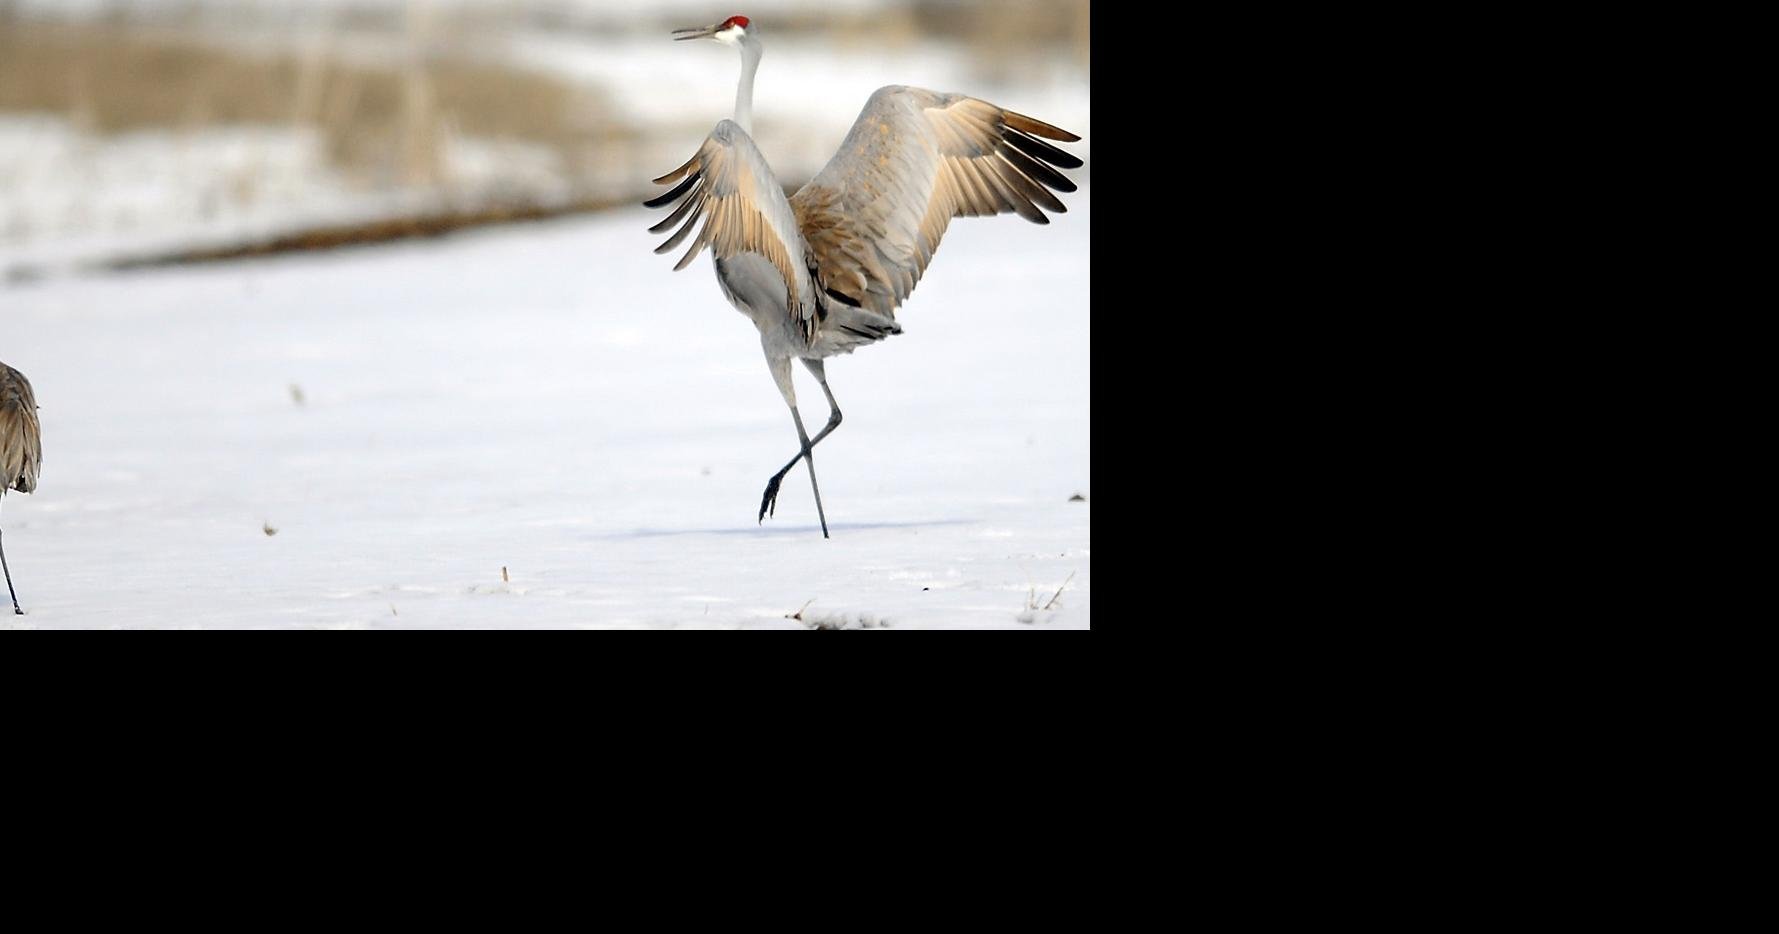 Spot Sandhill Cranes in Idaho This Fall